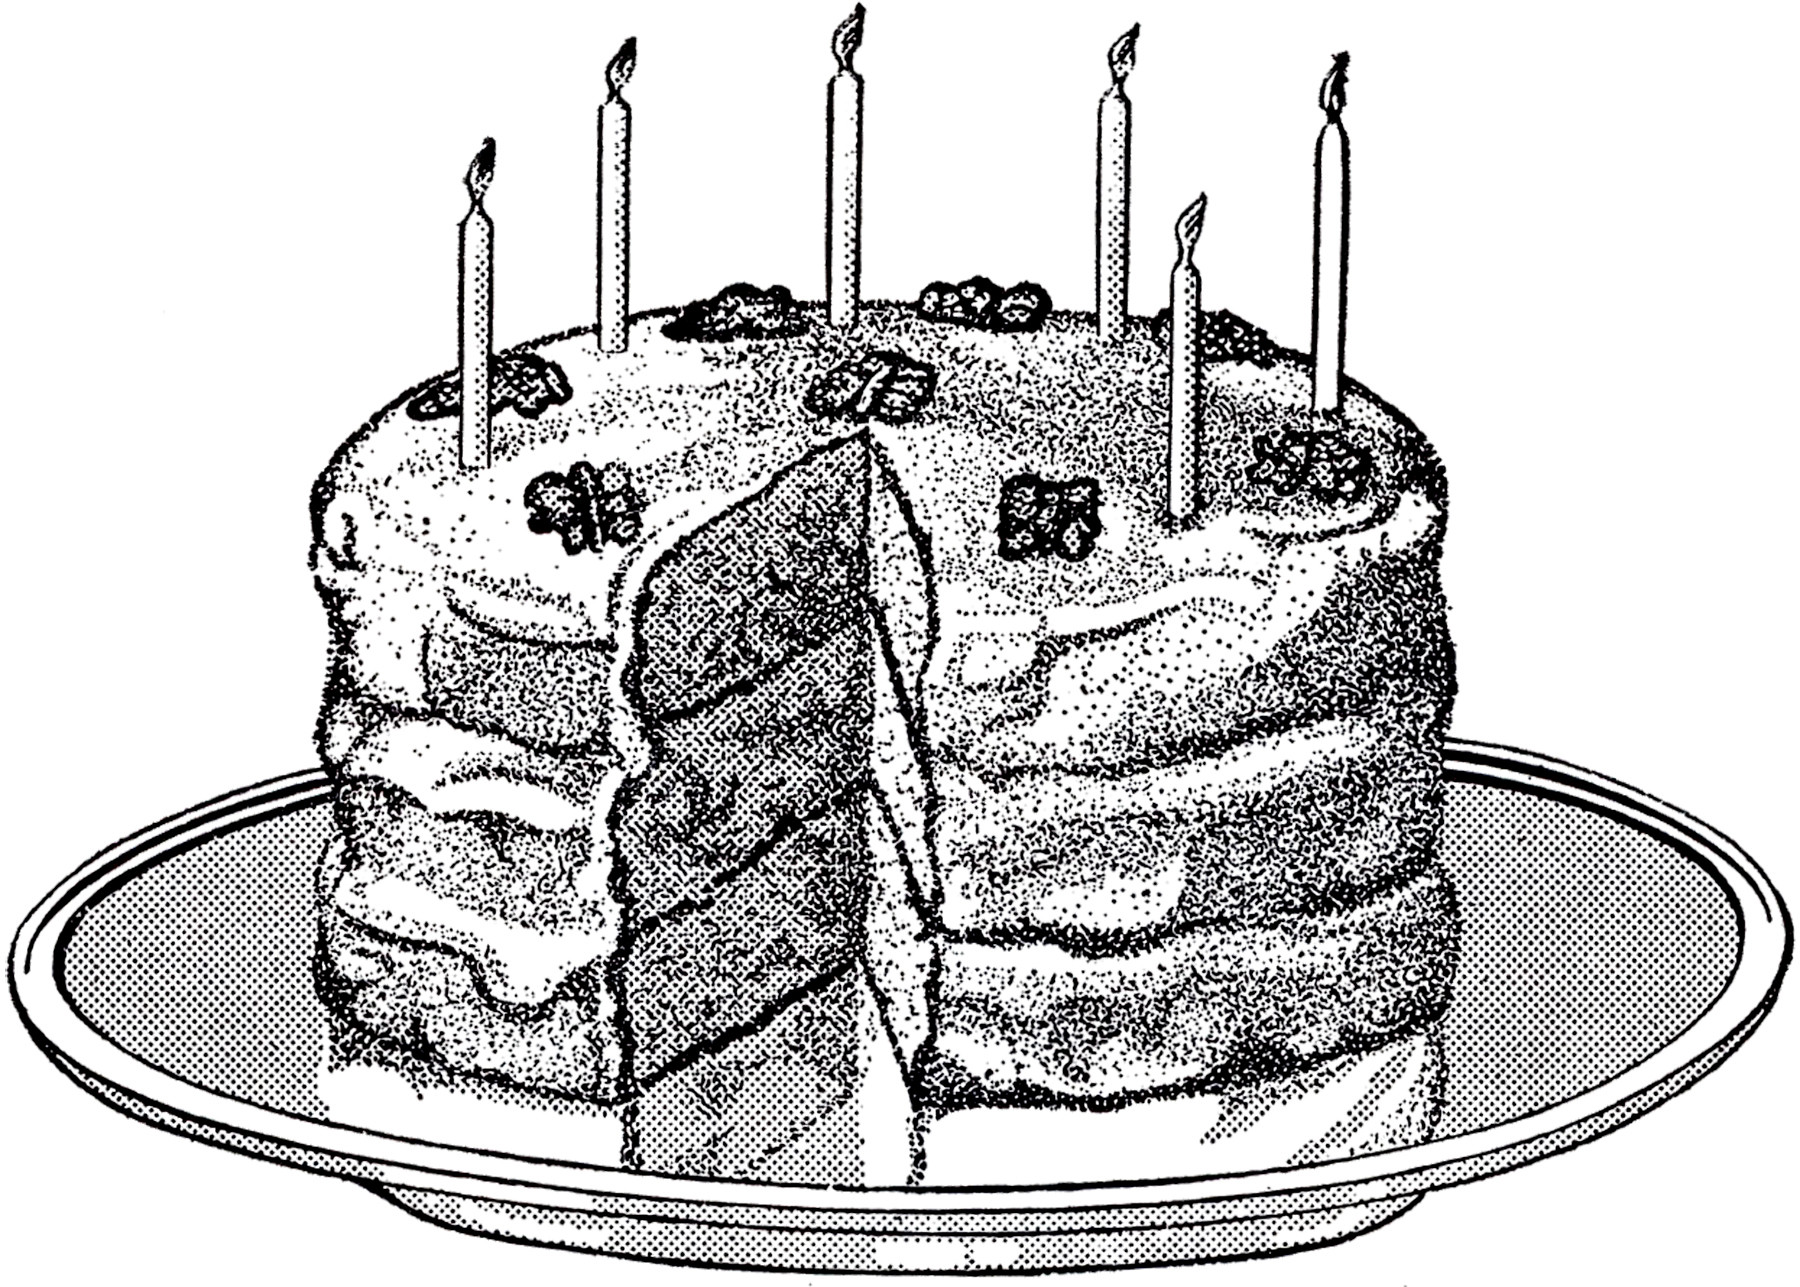 Birthday Cake Graphic
 Vintage Birthday Cake Image The Graphics Fairy